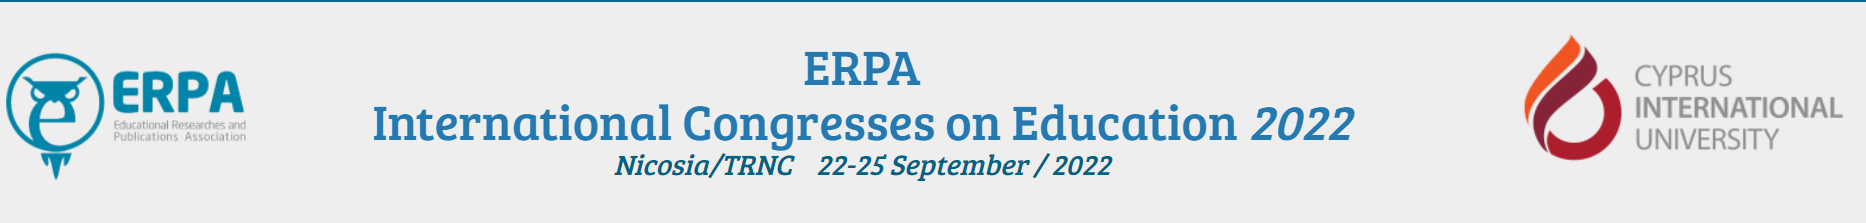 ERPA International Congresses on Education 2022